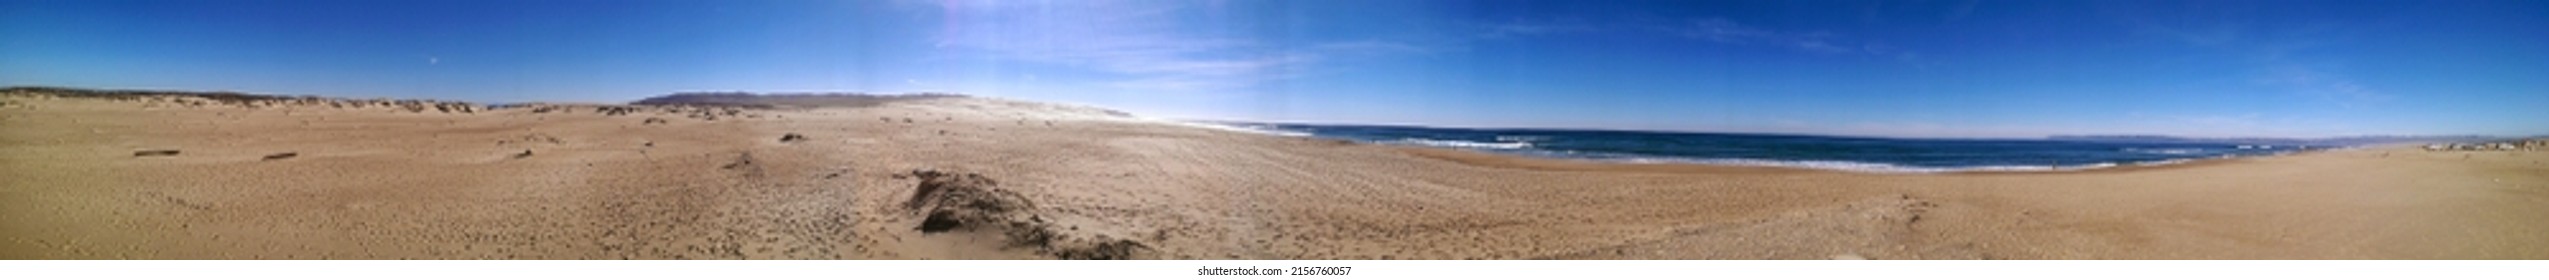 panorama of california beach and sand